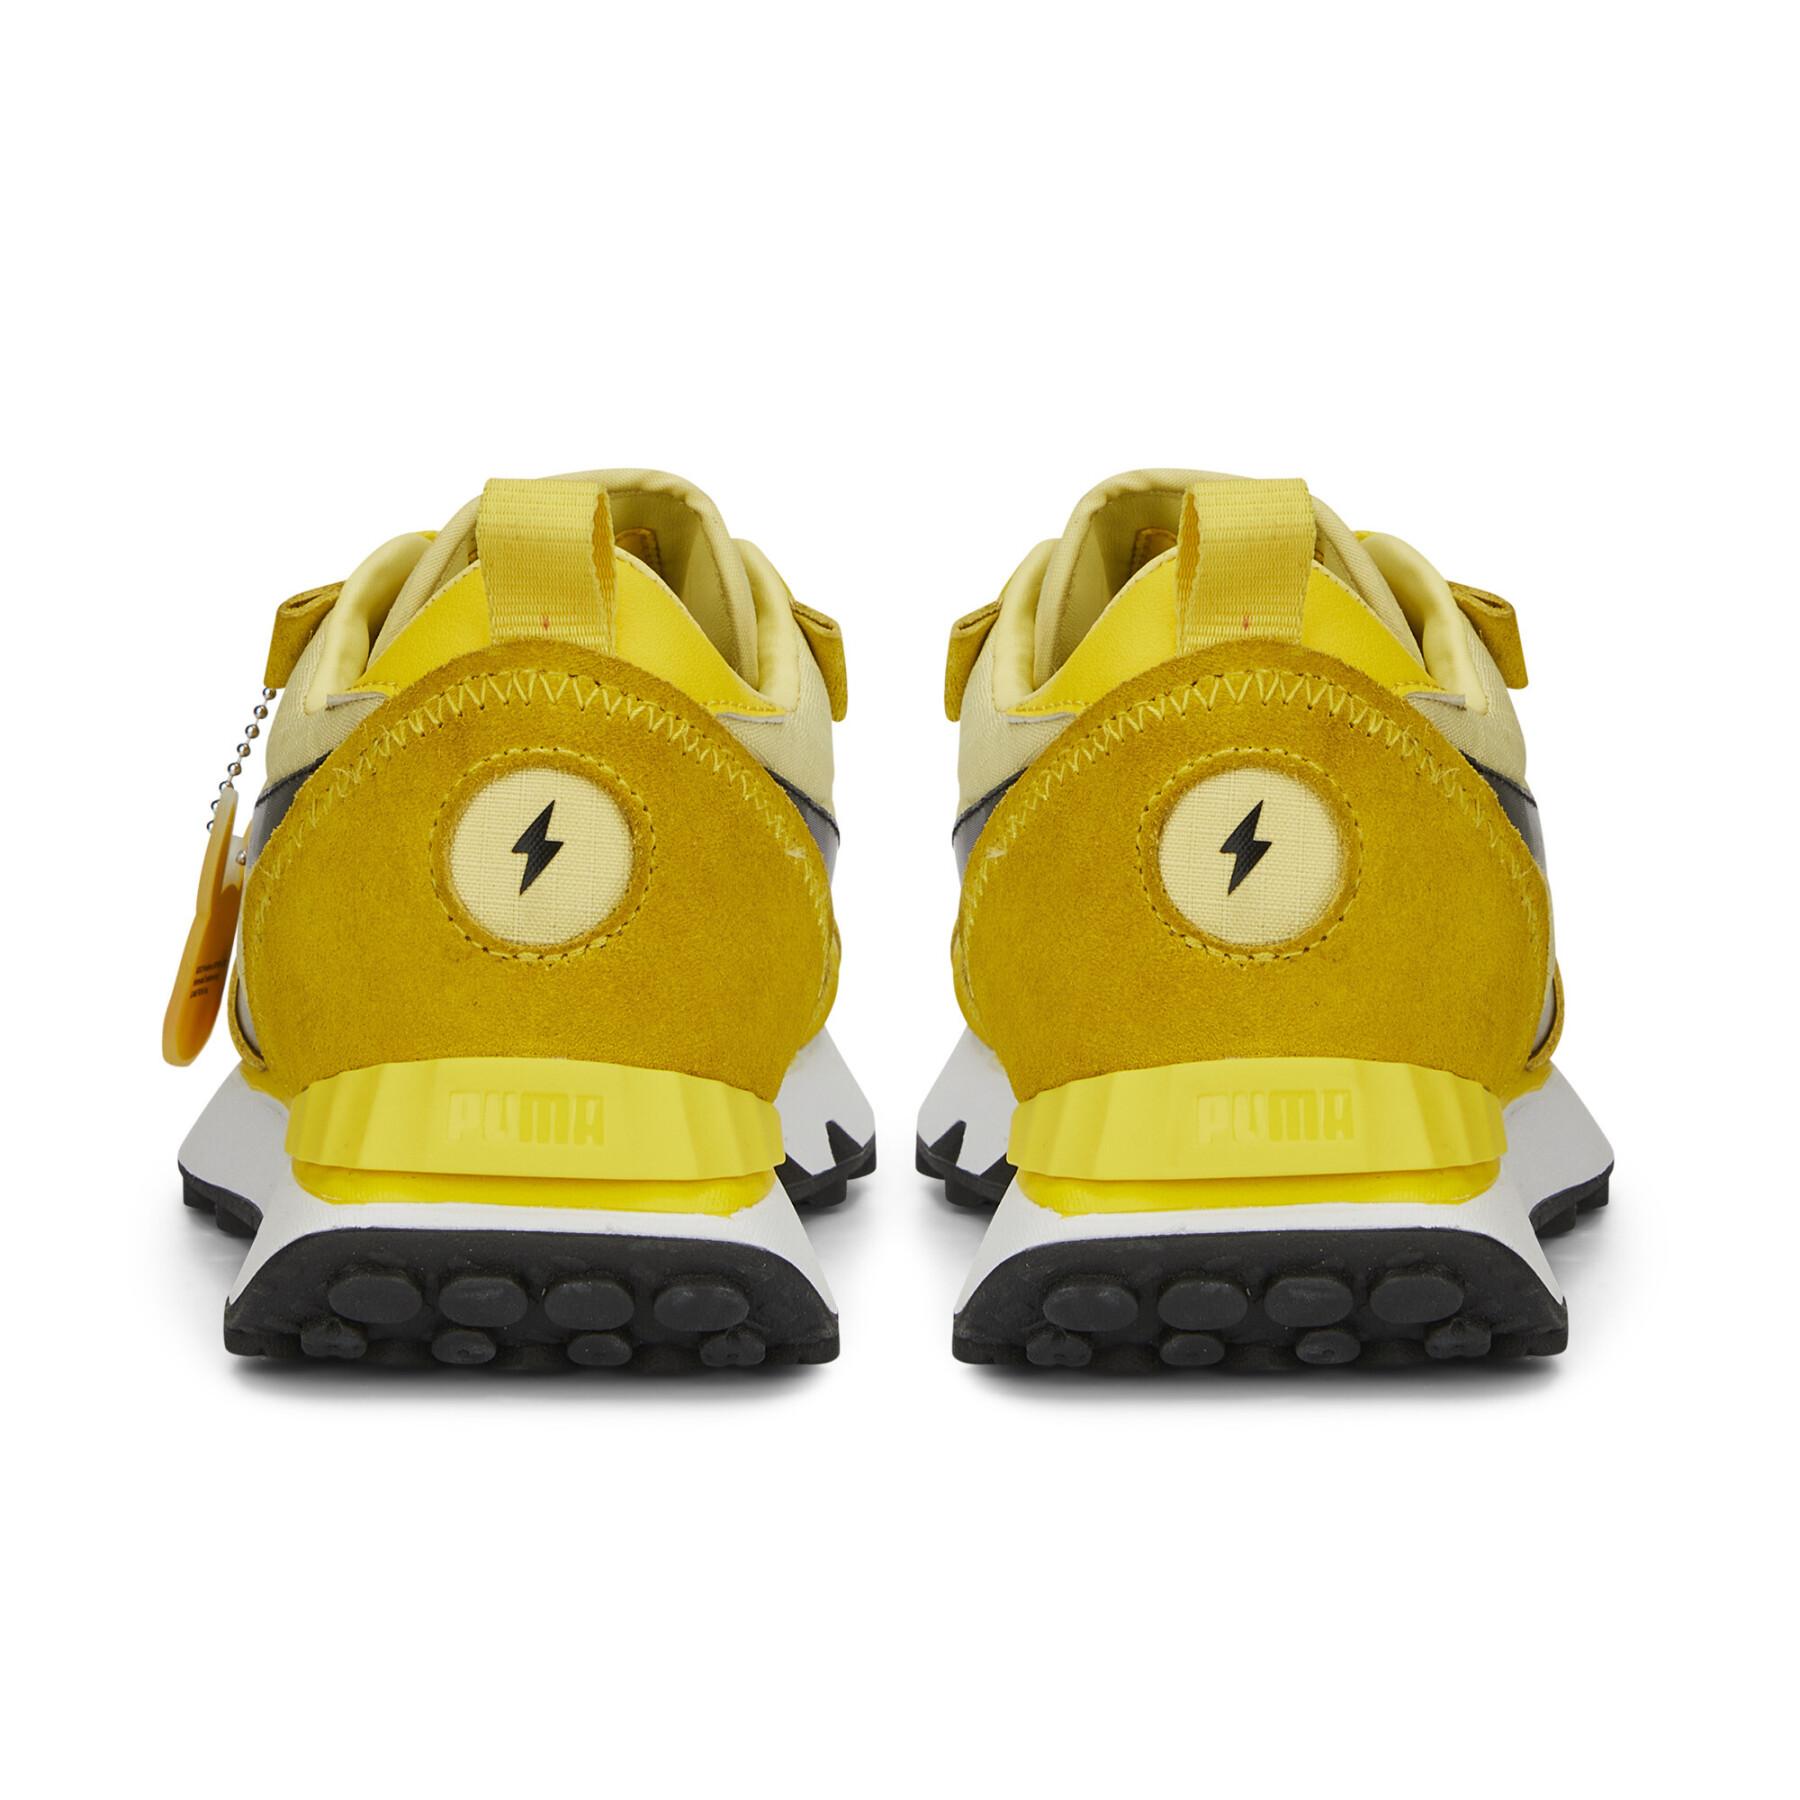 Children's sneakers Puma Rider Fv Pikachu